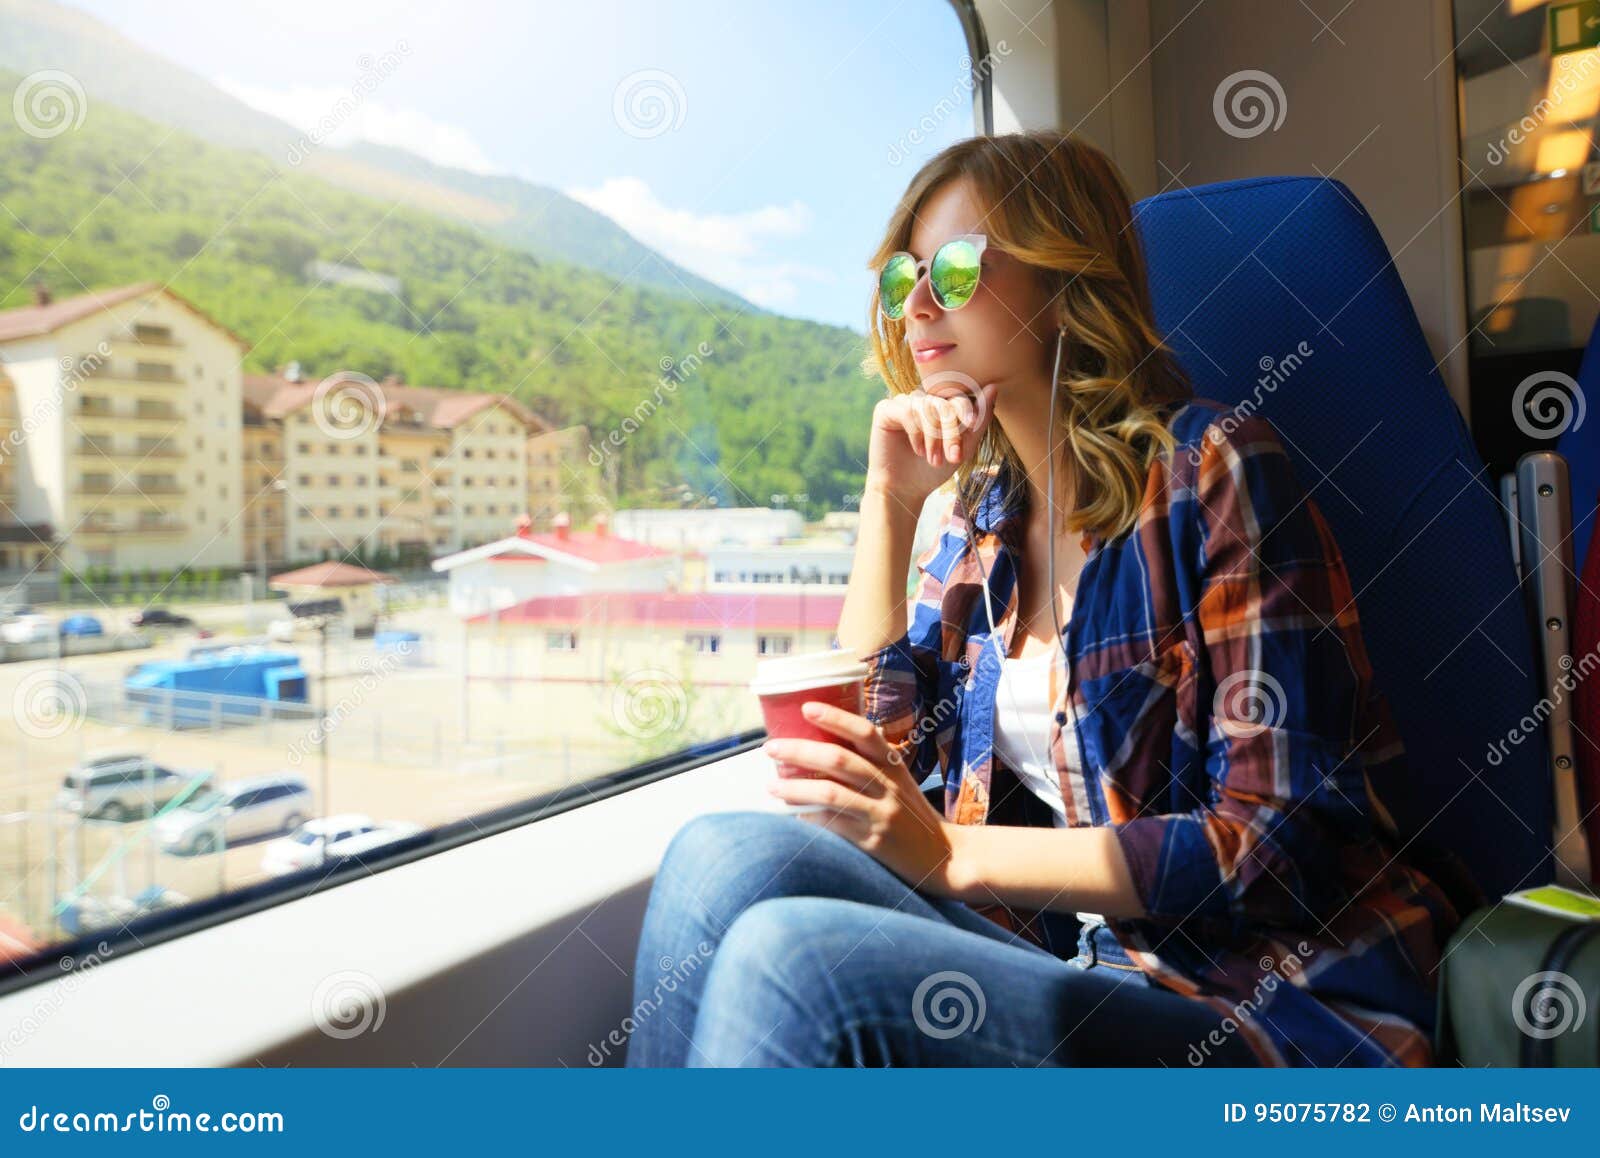 beautiful girl travelling on train. rosa khutor